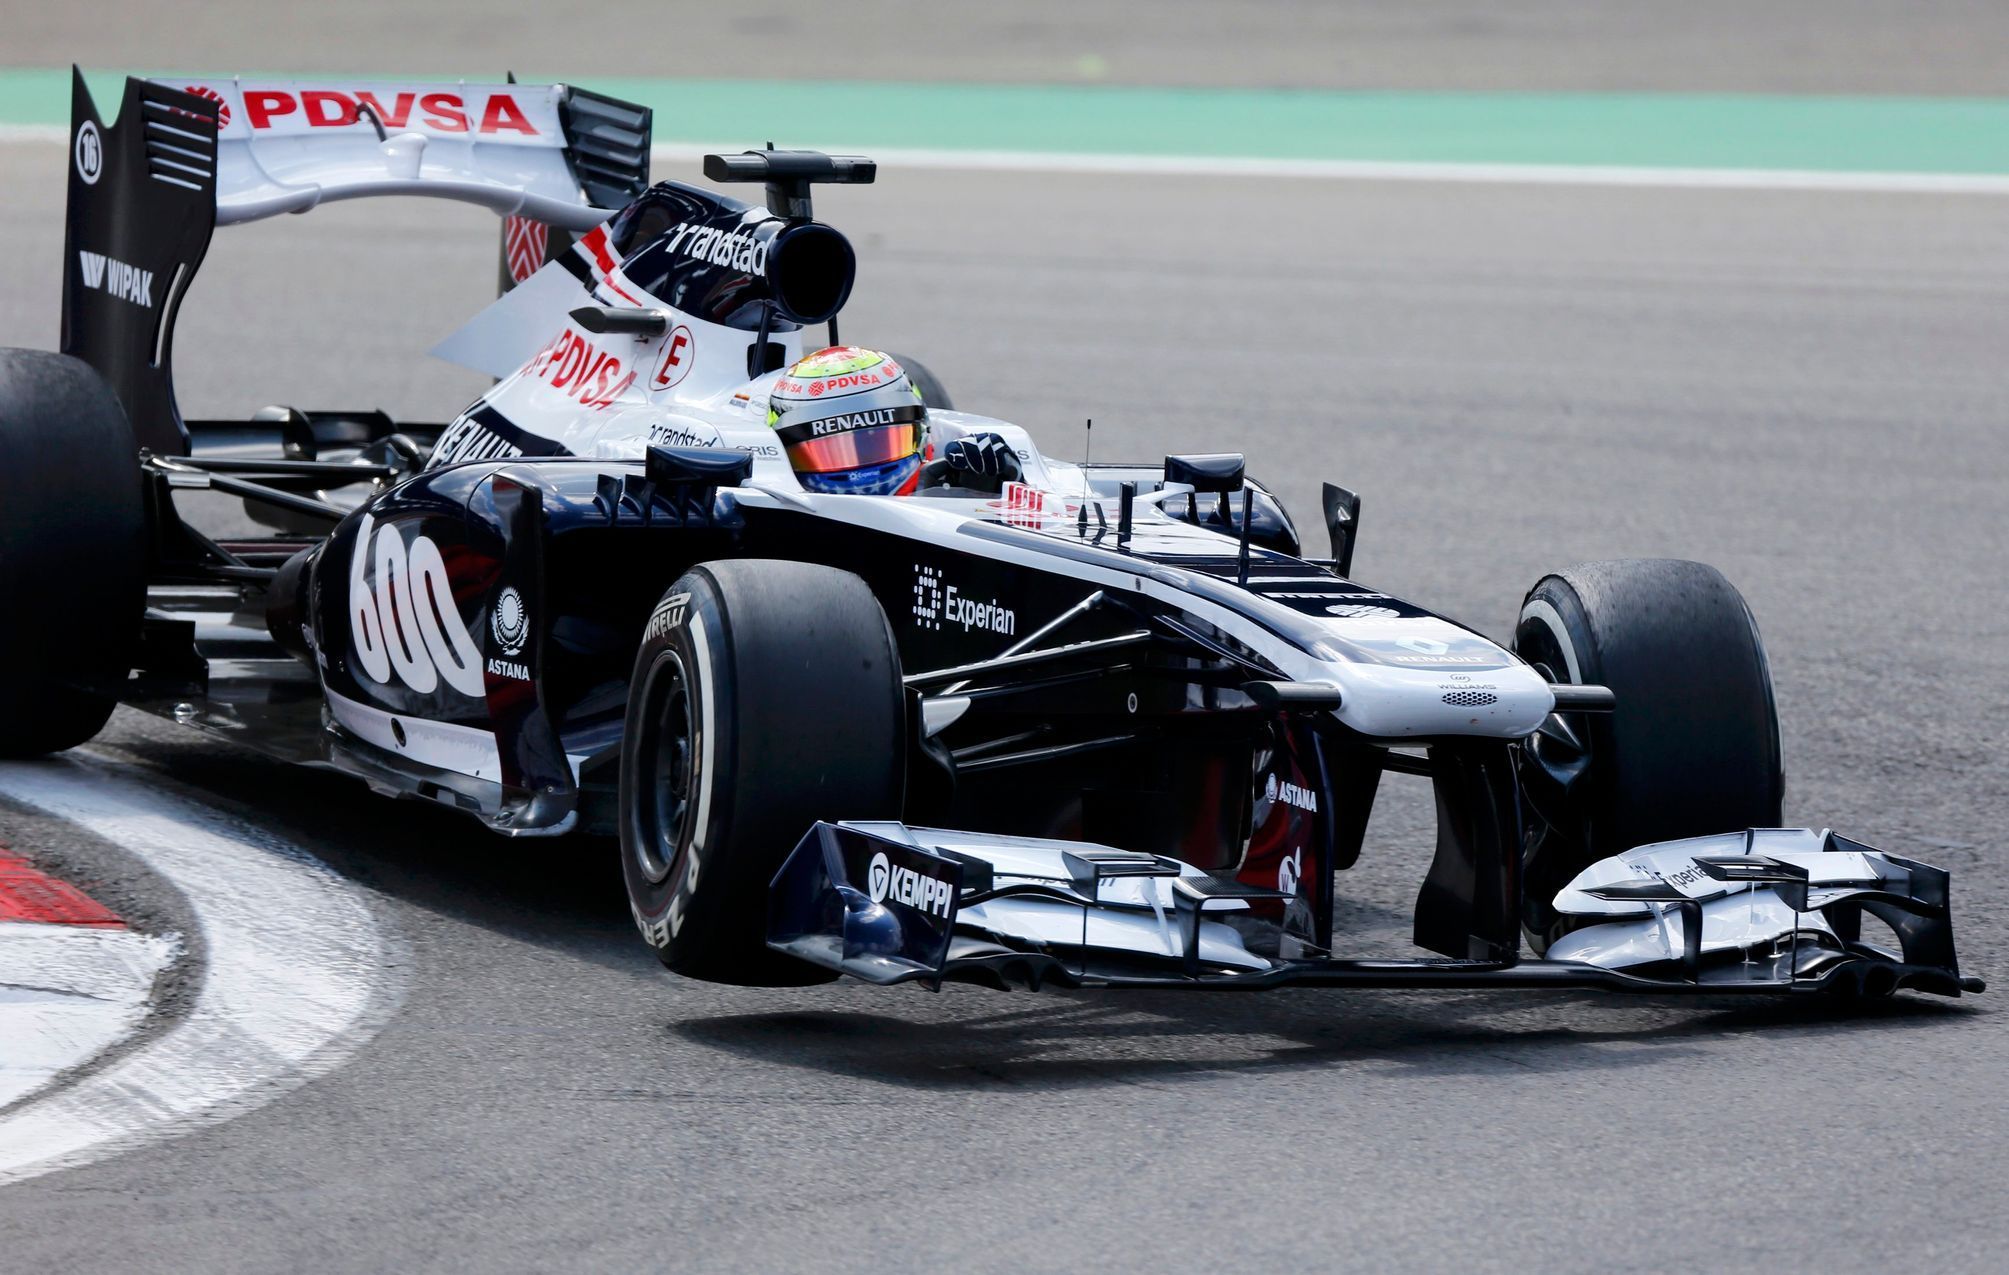 Williams Formula One driver Maldonaldo takes a corner during